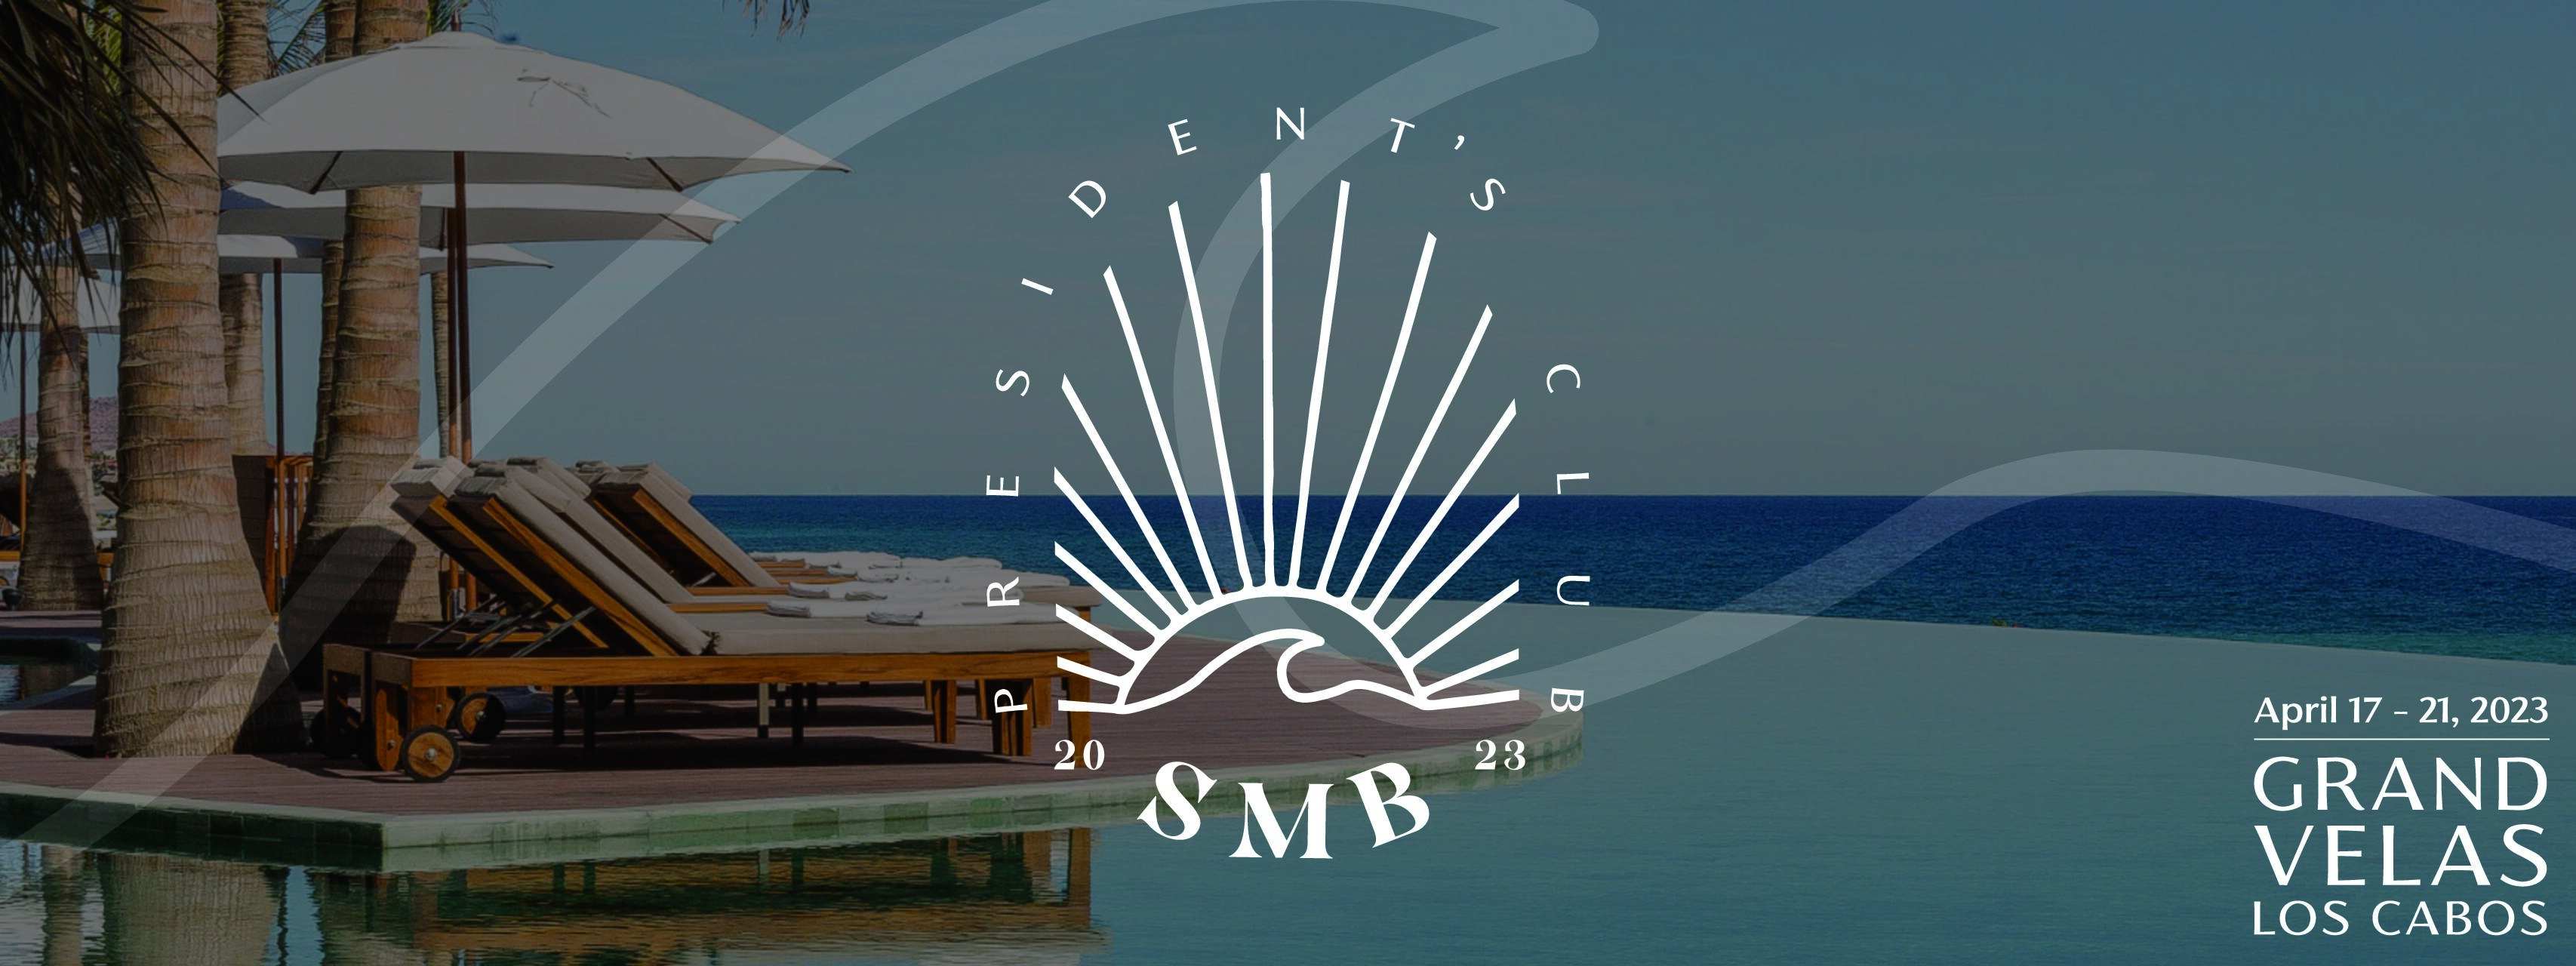 SMB President's Club Slide Deck v1.0 (dragged) 2